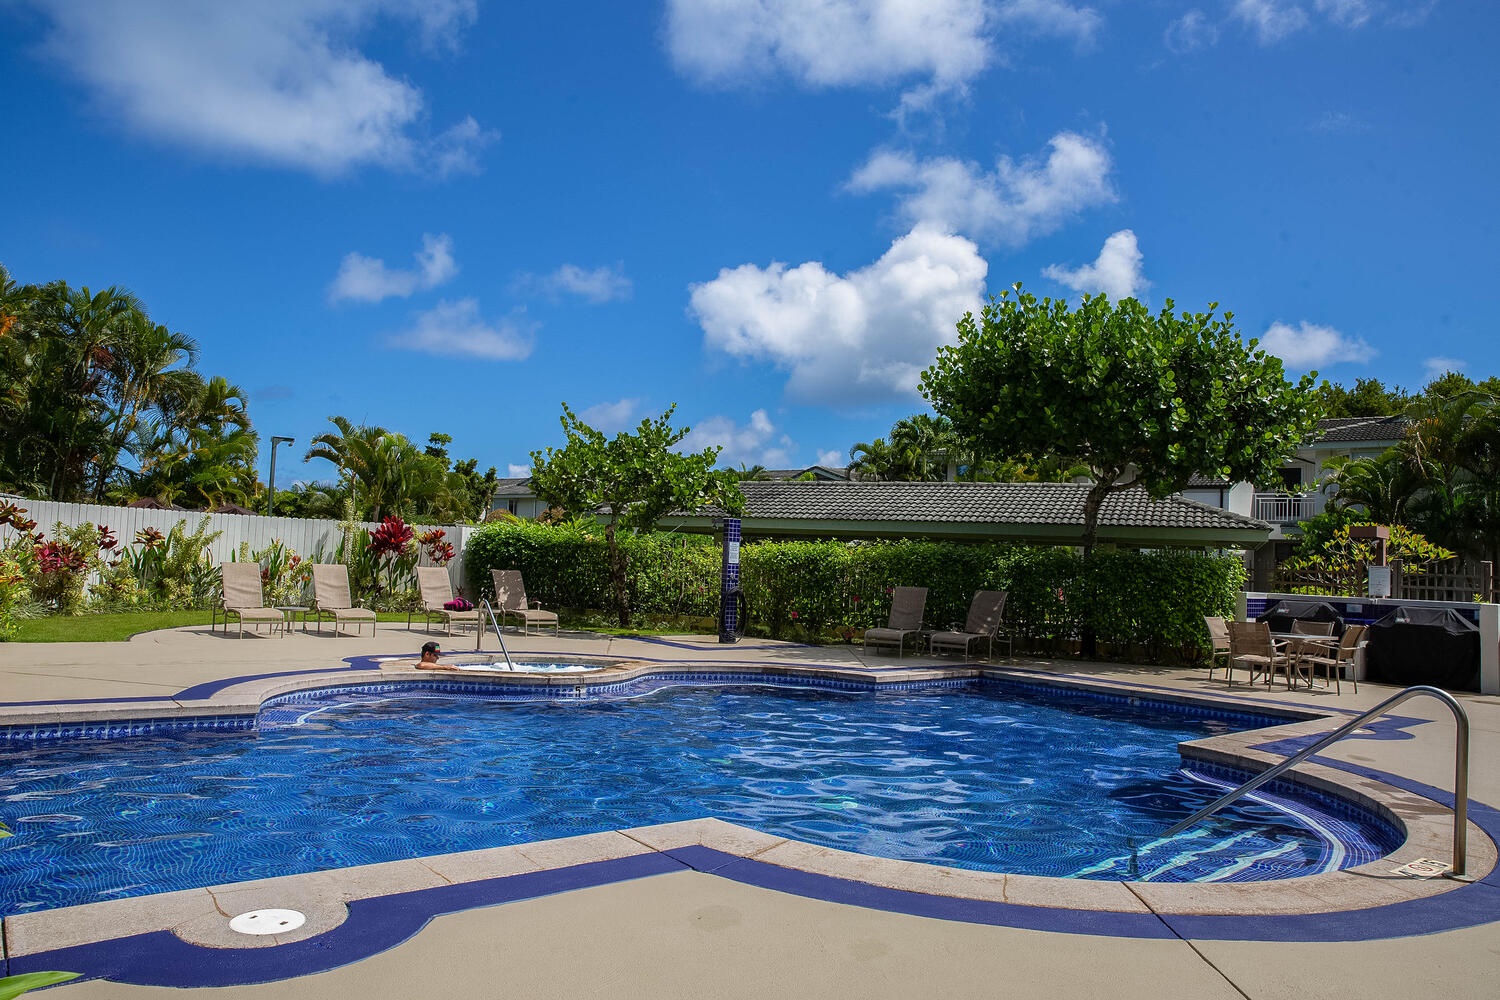 Princeville Vacation Rentals, Emmalani Court 414 - Enjoy a refreshing swim at the community pool!